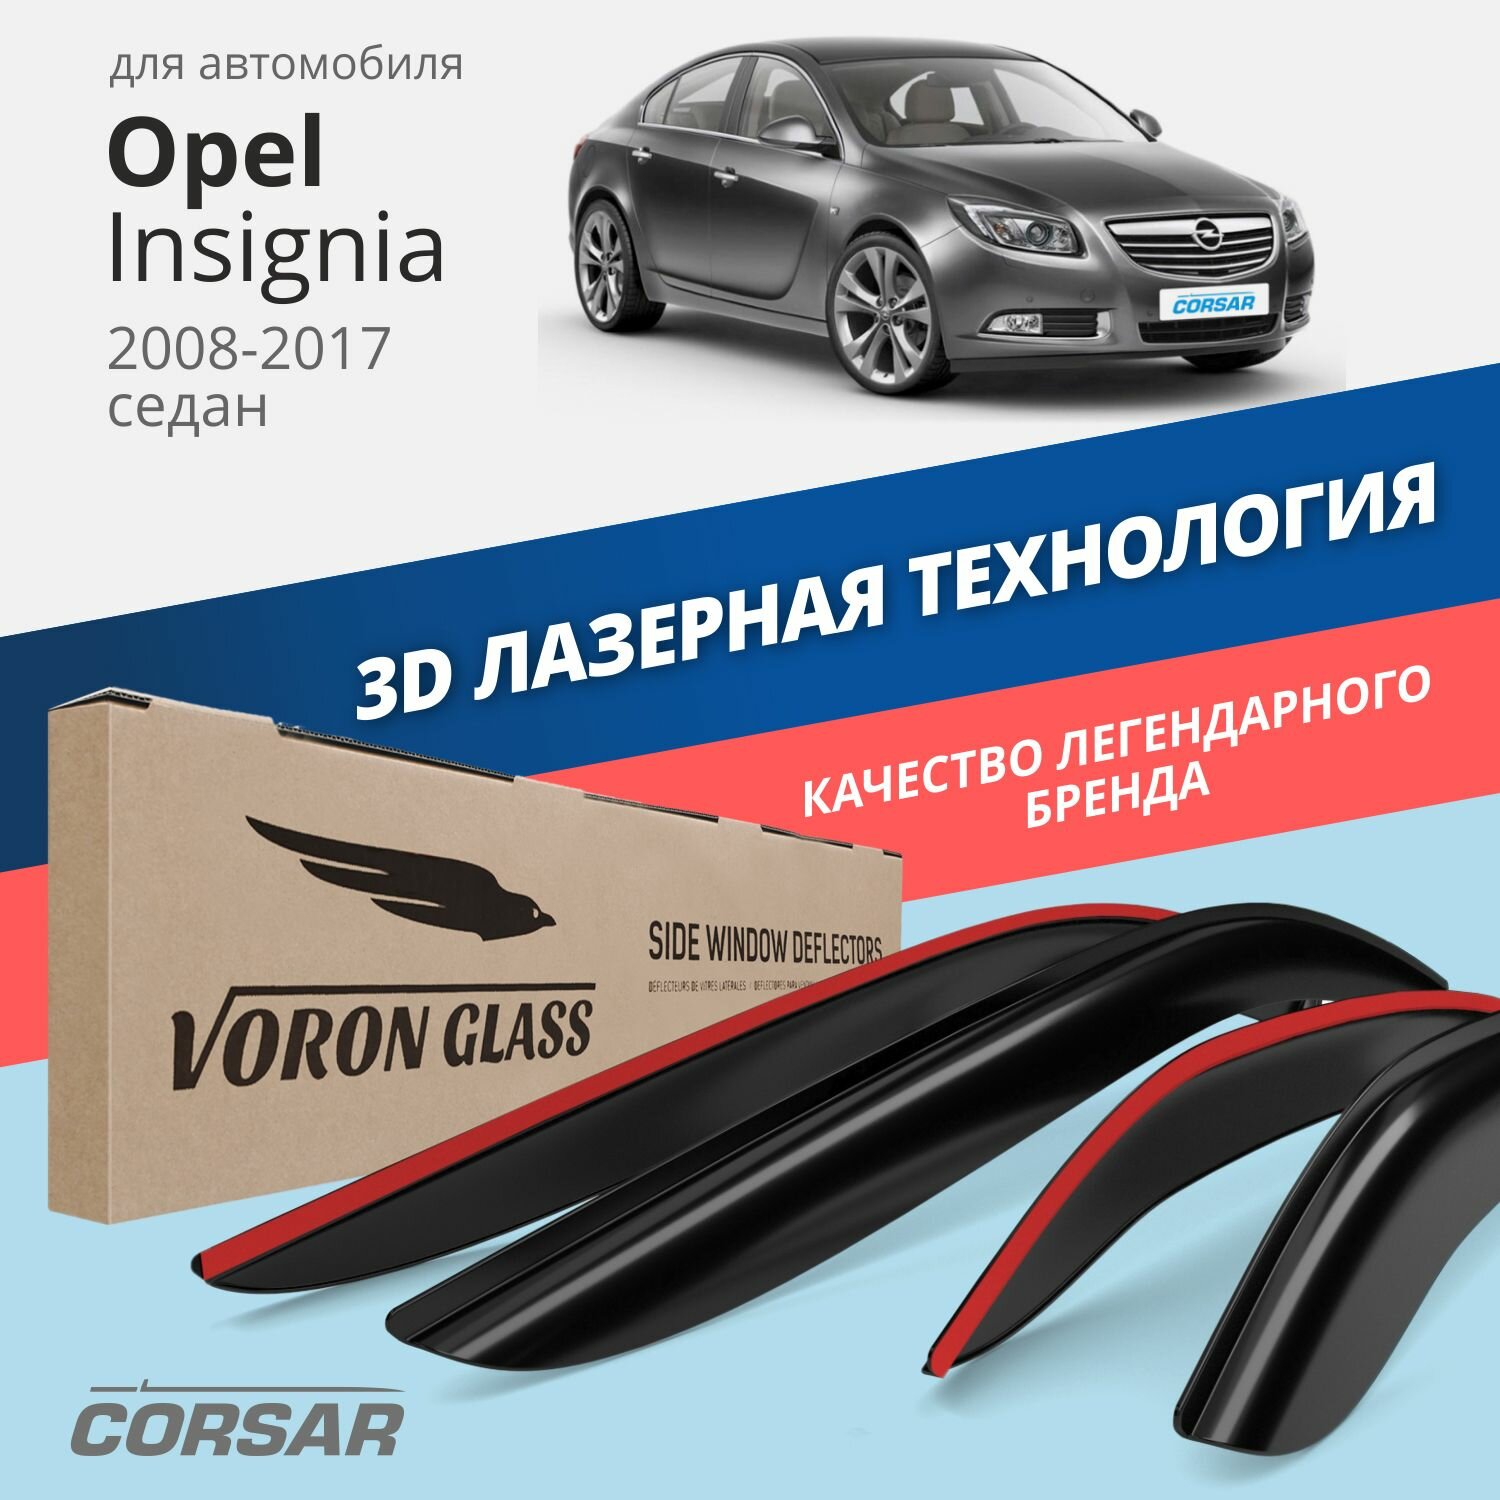 Дефлекторы окон Voron Glass серия Corsar для Opel Insignia Sd 2008-2017/седан накладные 4 шт.